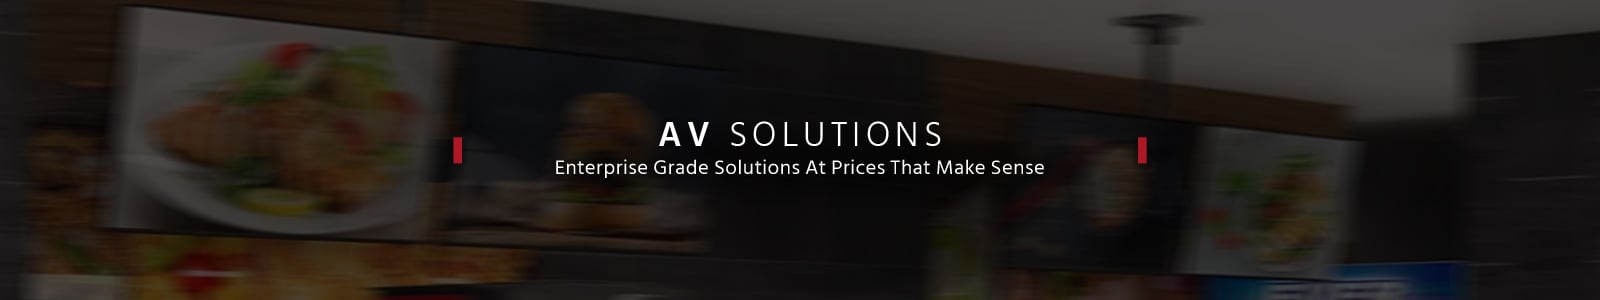 AV Solutions
Enterprise Grade Solutions At Prices That Make Sense
Shop Now